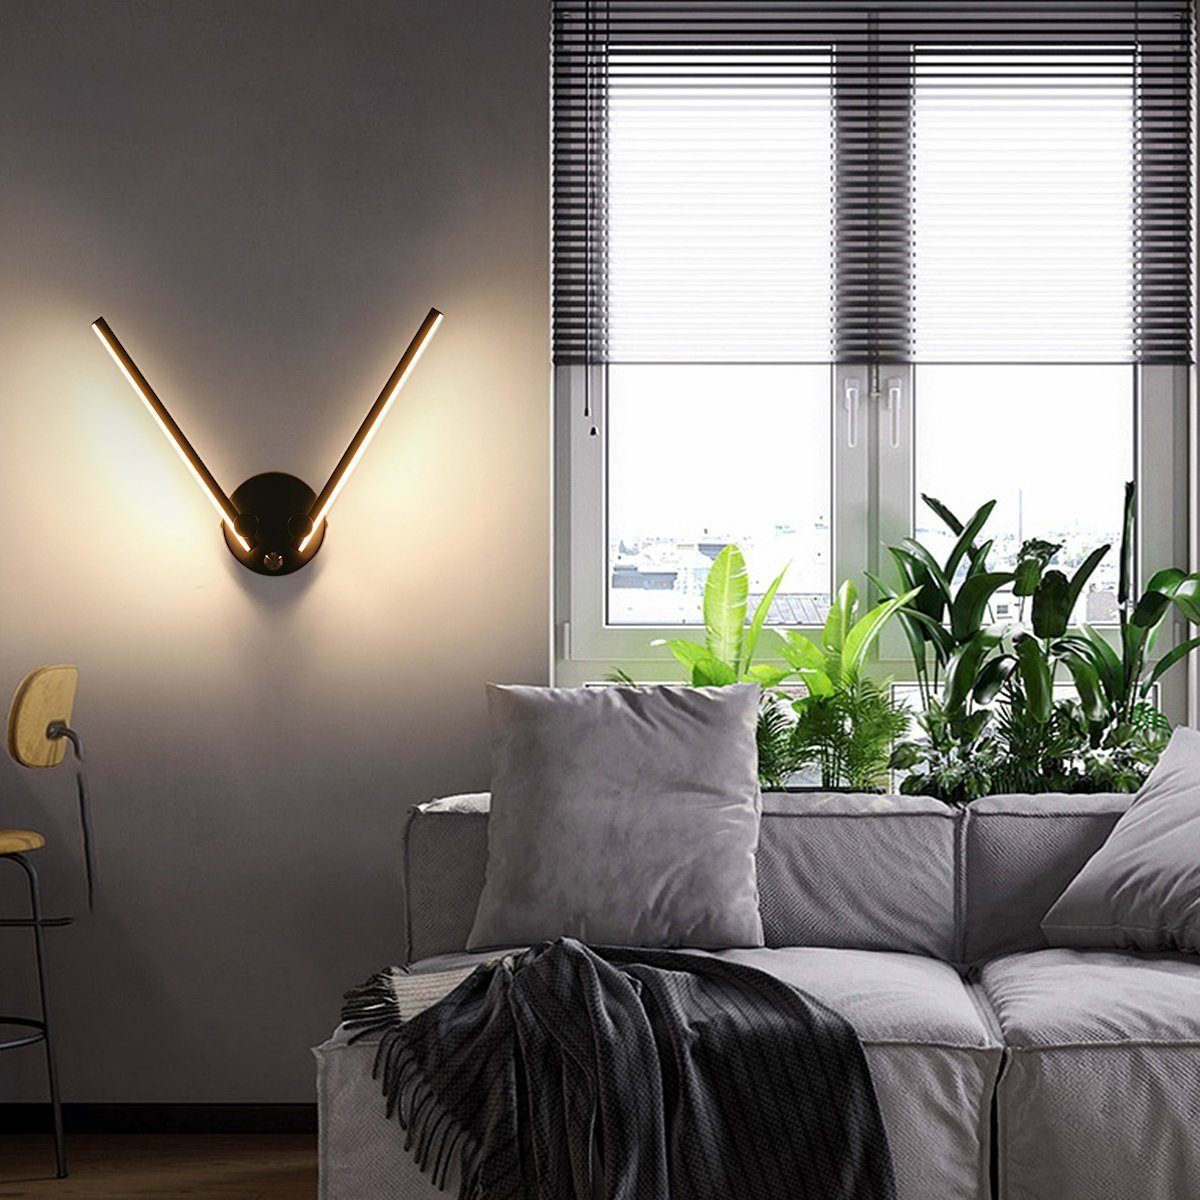 LETGOSPT LED Wandleuchte Wandlampe Wohnzimmer 180° Schwenkbar Schwarze Wandbeleuchtung, LED fest integriert, Warmweiß, Flurlampe Wohnzimmerlampe, für Treppenhaus Wohnzimmer Schlafzimmer 1 Stück